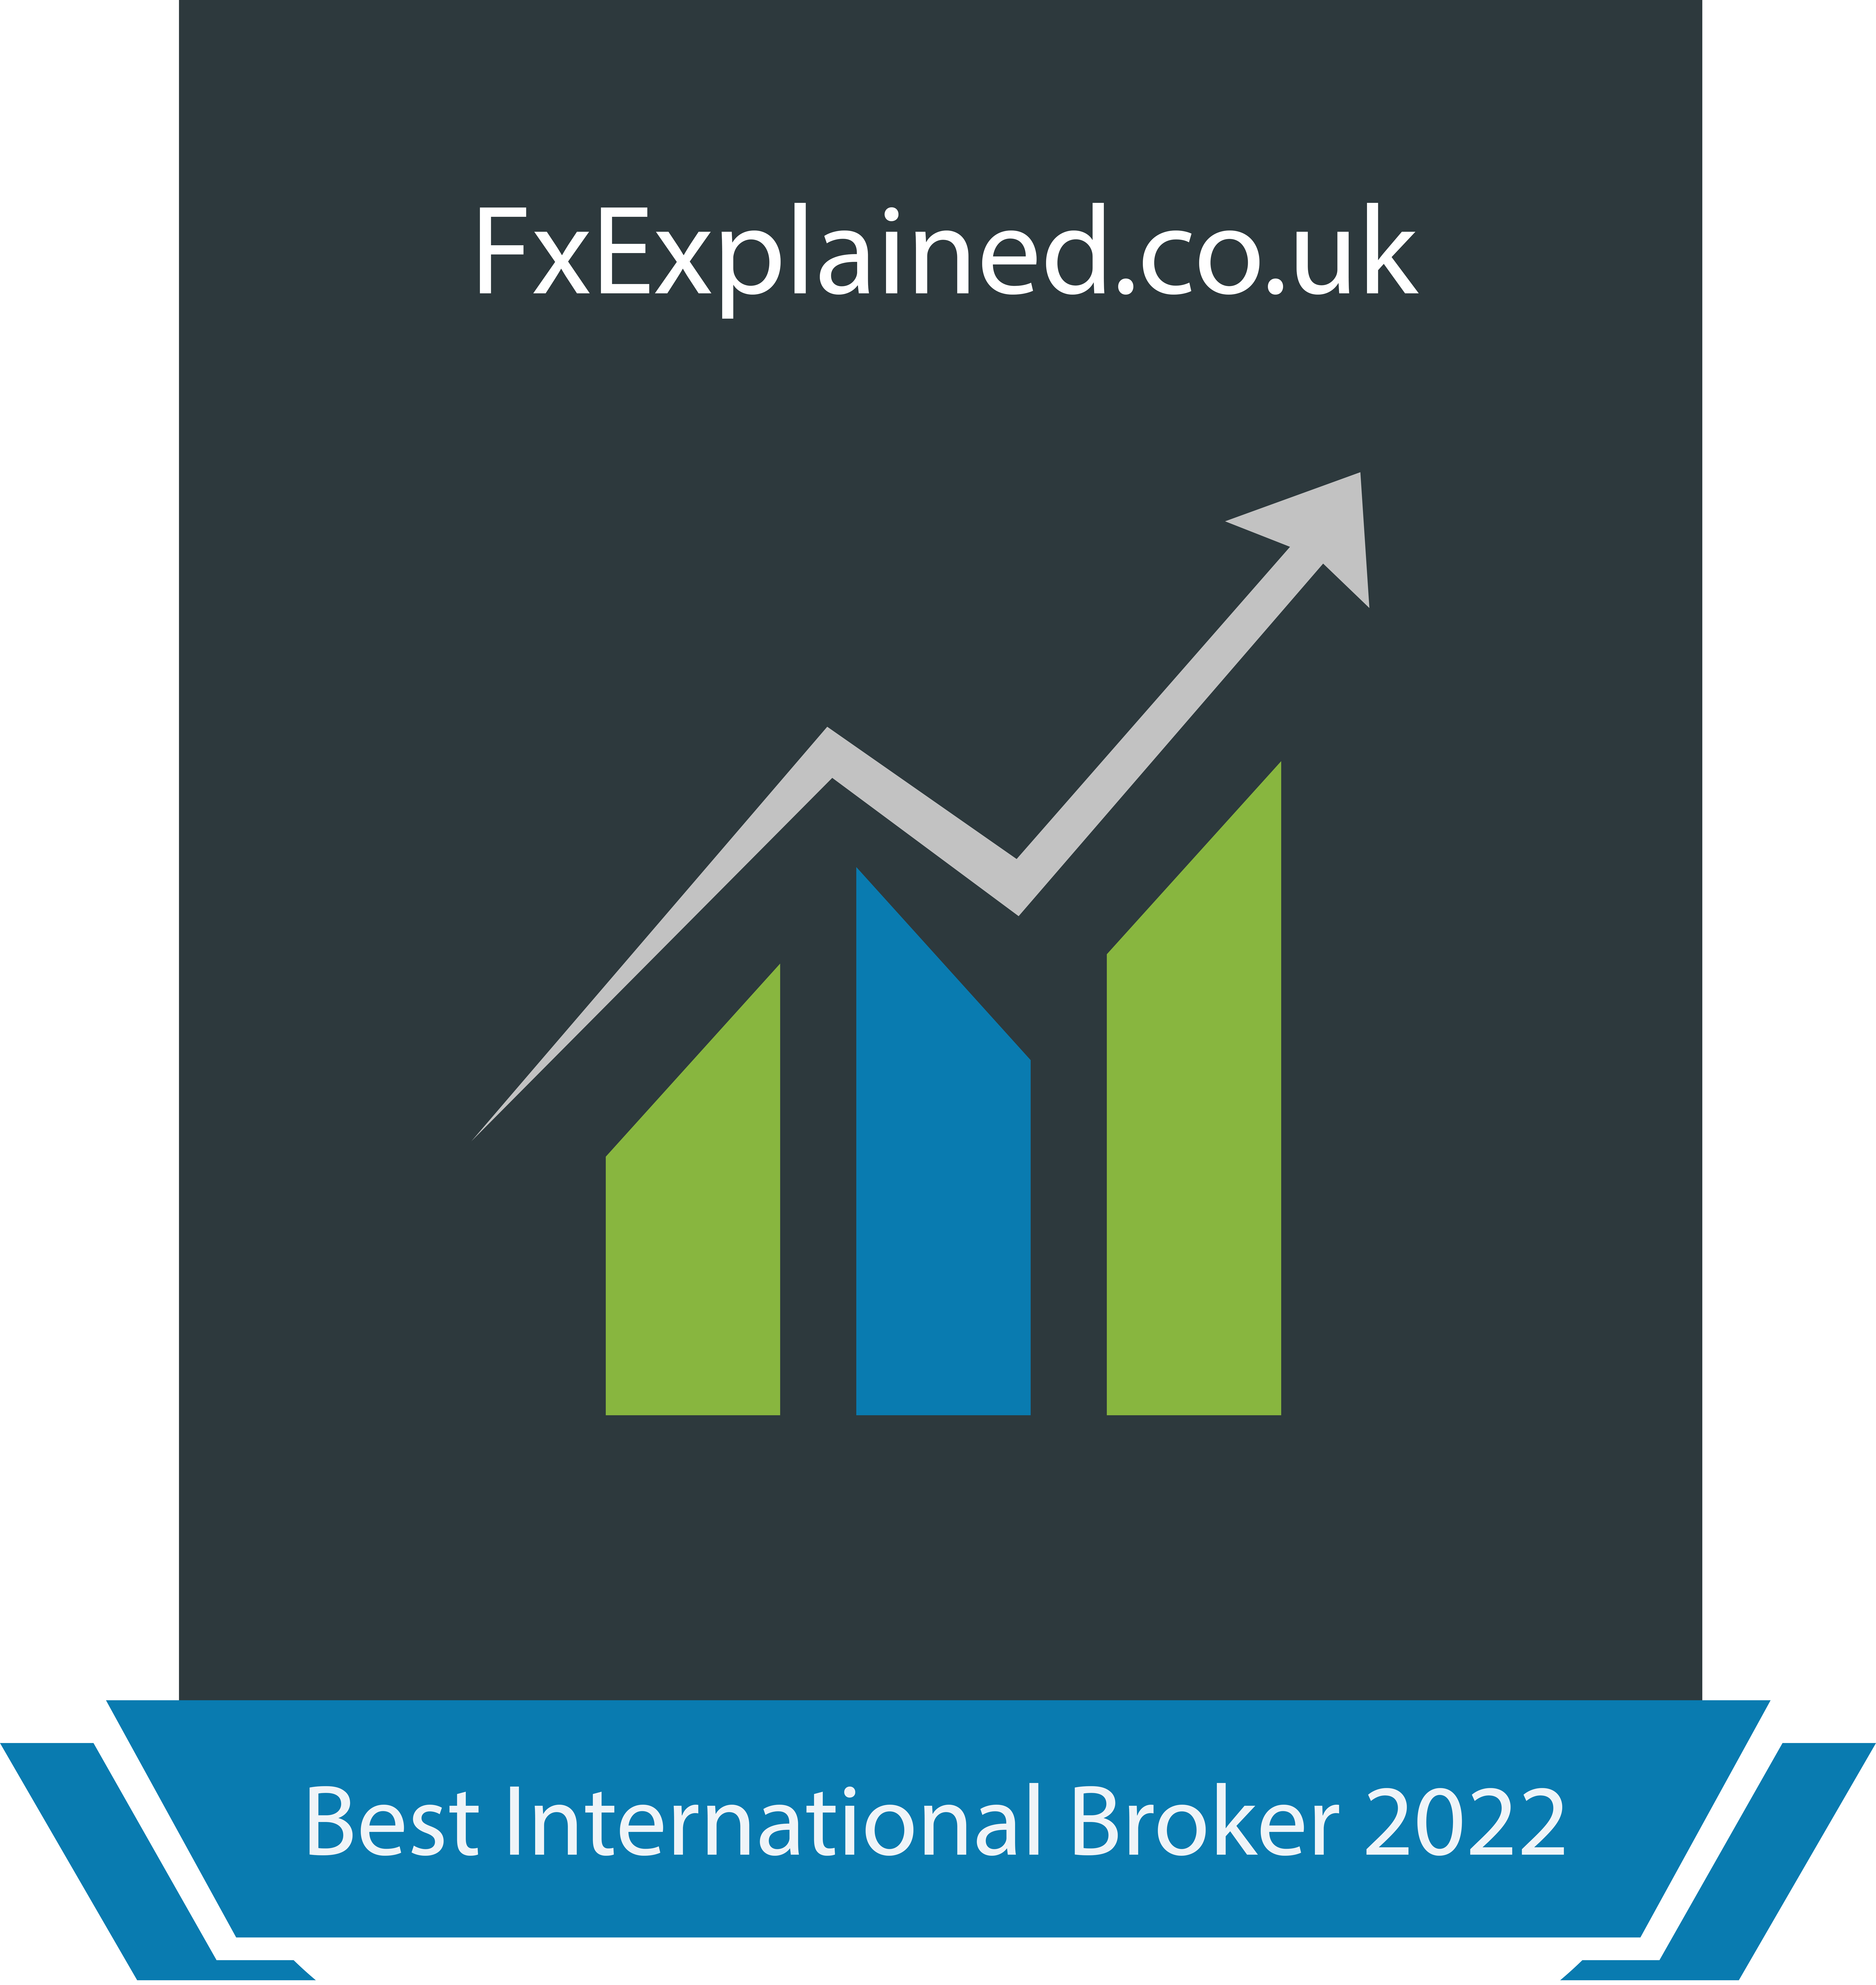 Best International Broker 2022